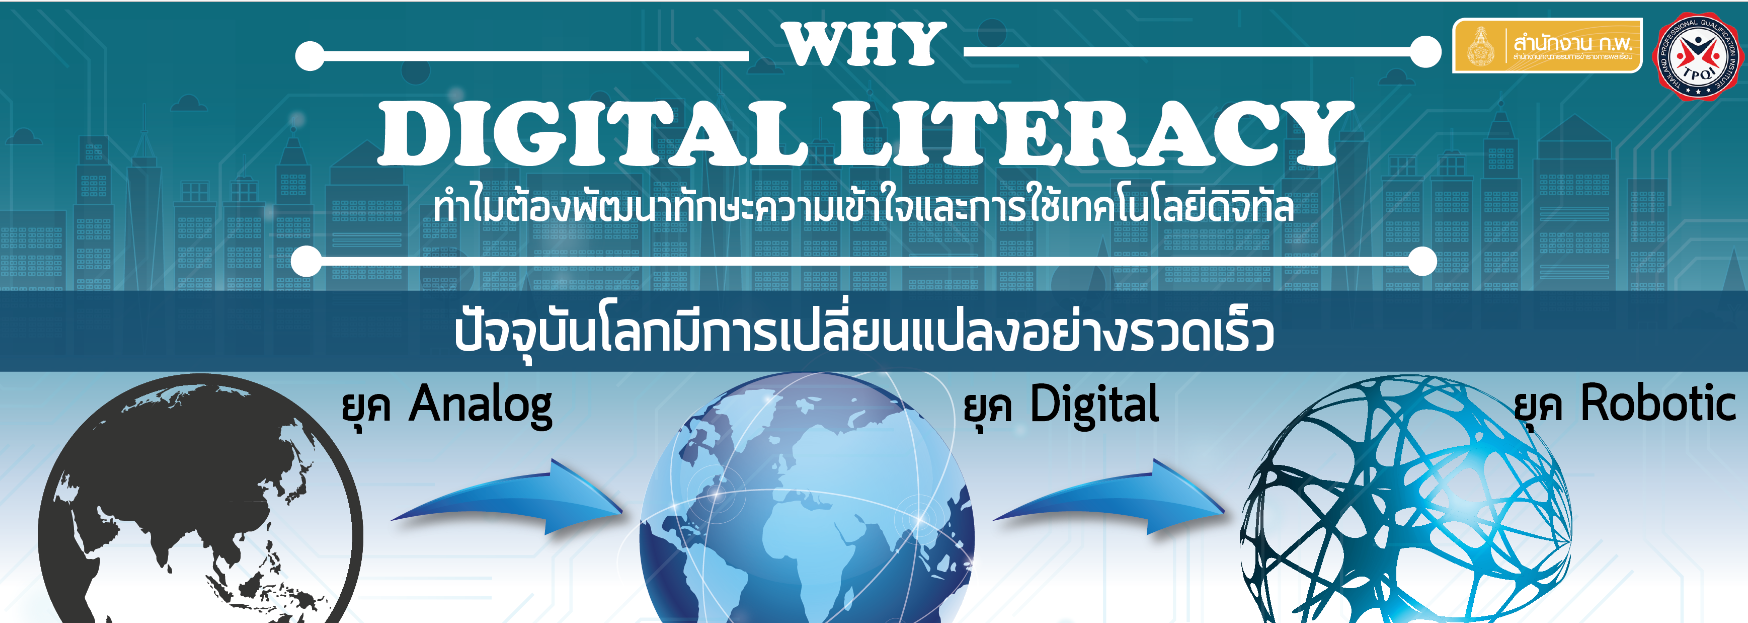 Digital Literacy คืออะไร มีทักษะที่ต้องพัฒนาสู่นักเรียนอะไรบ้าง ?